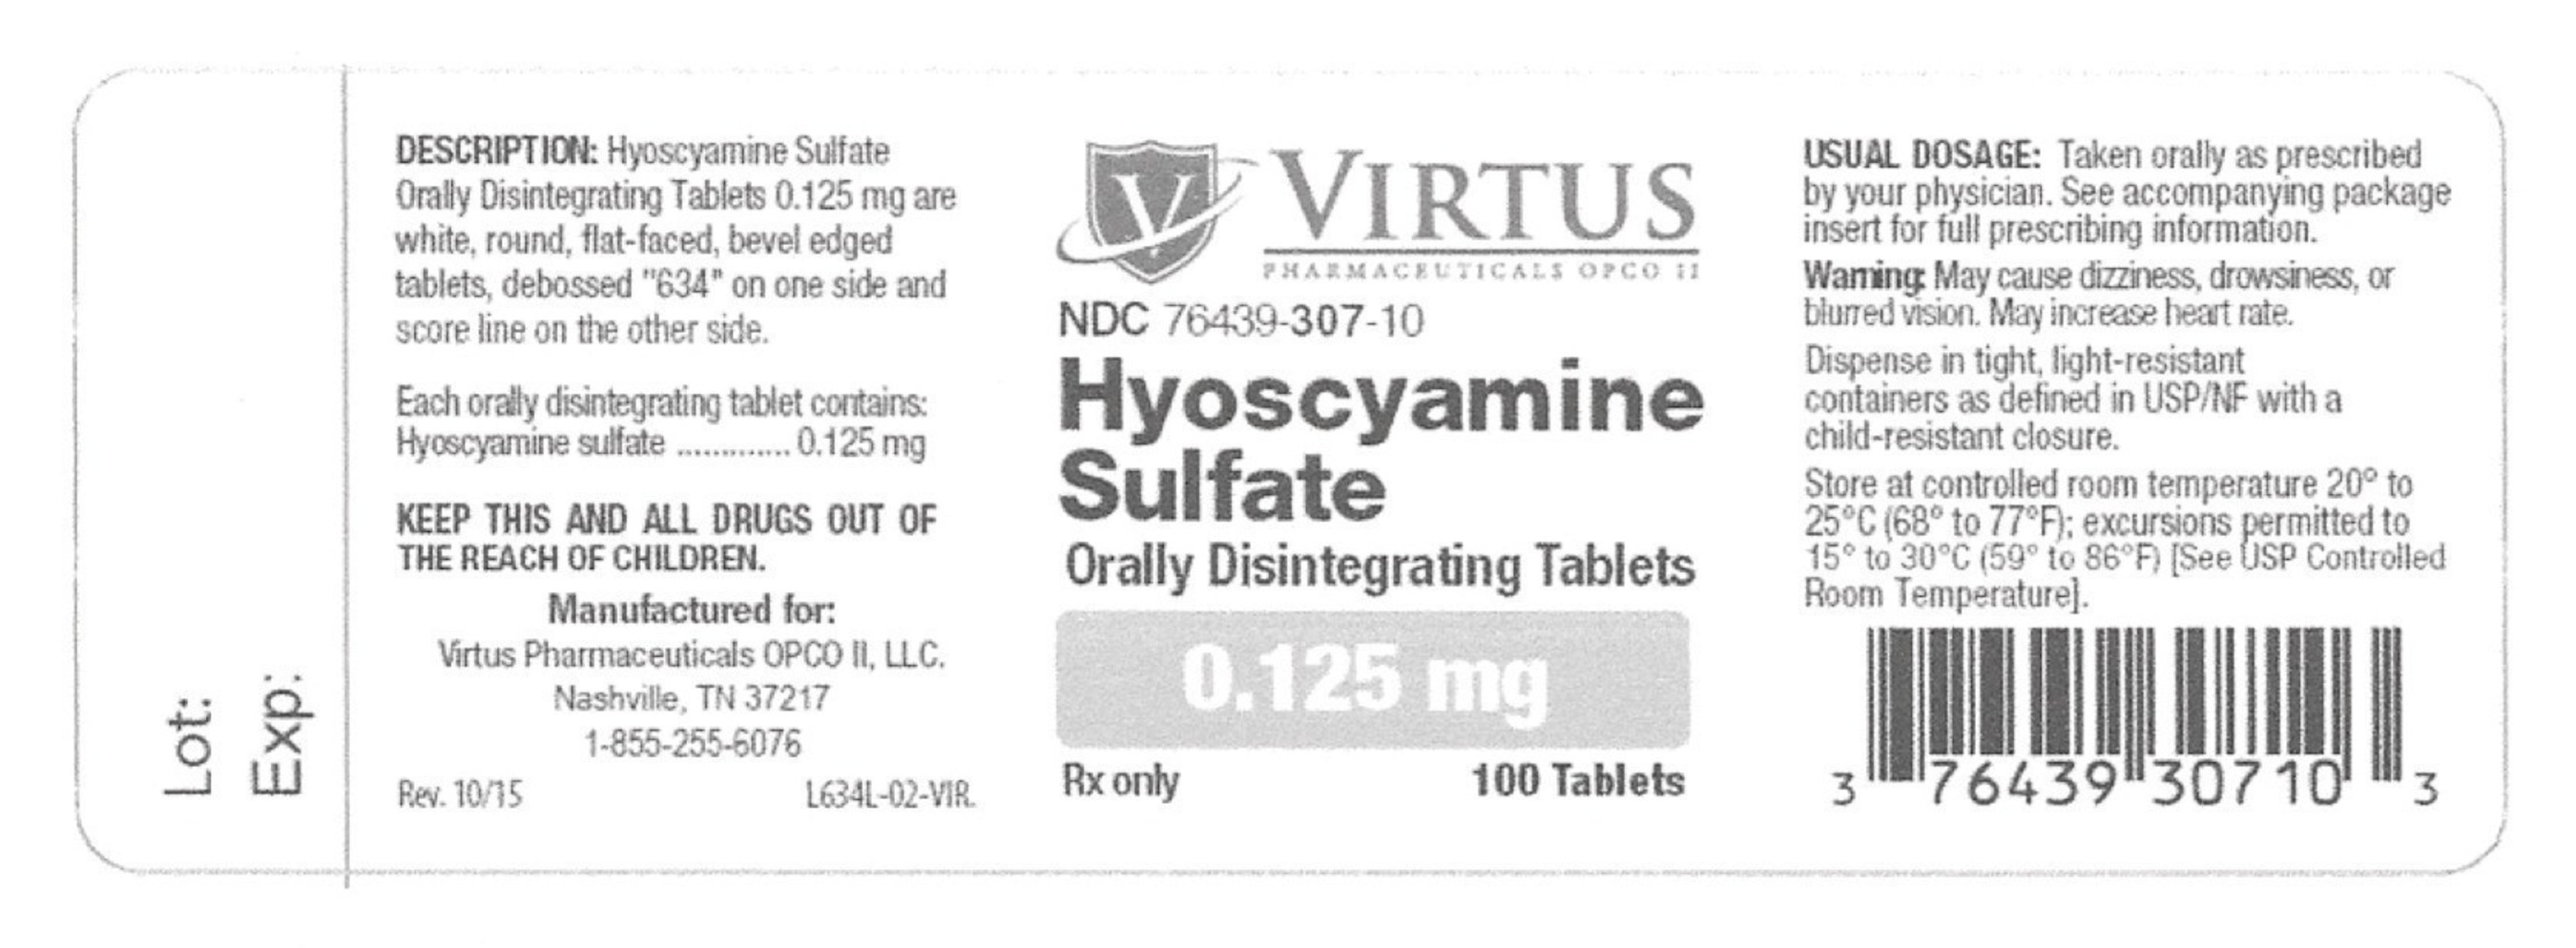 Hyoscyamine Sulfate Orally Disintegrating tablets, NDC 76439-307-10: